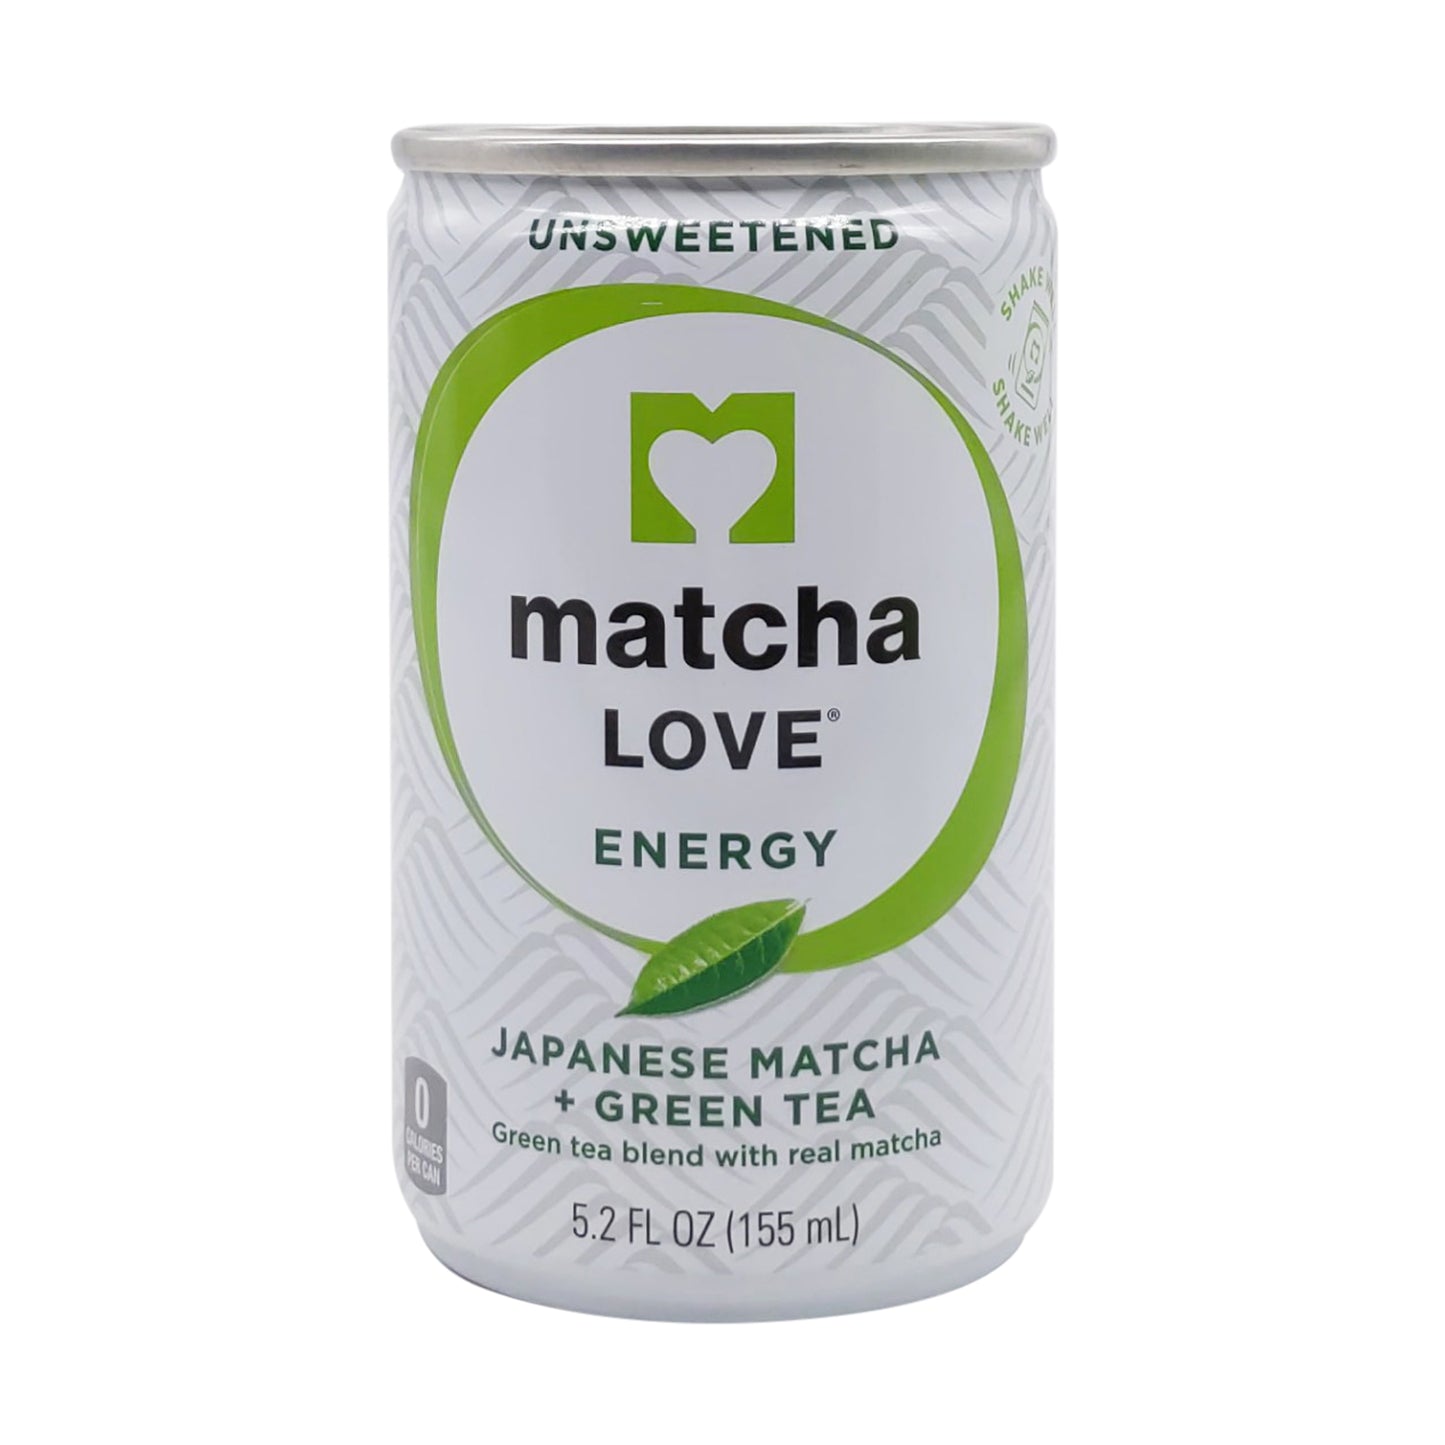 MATCHA LOVE Energy japanese matcha + green tea